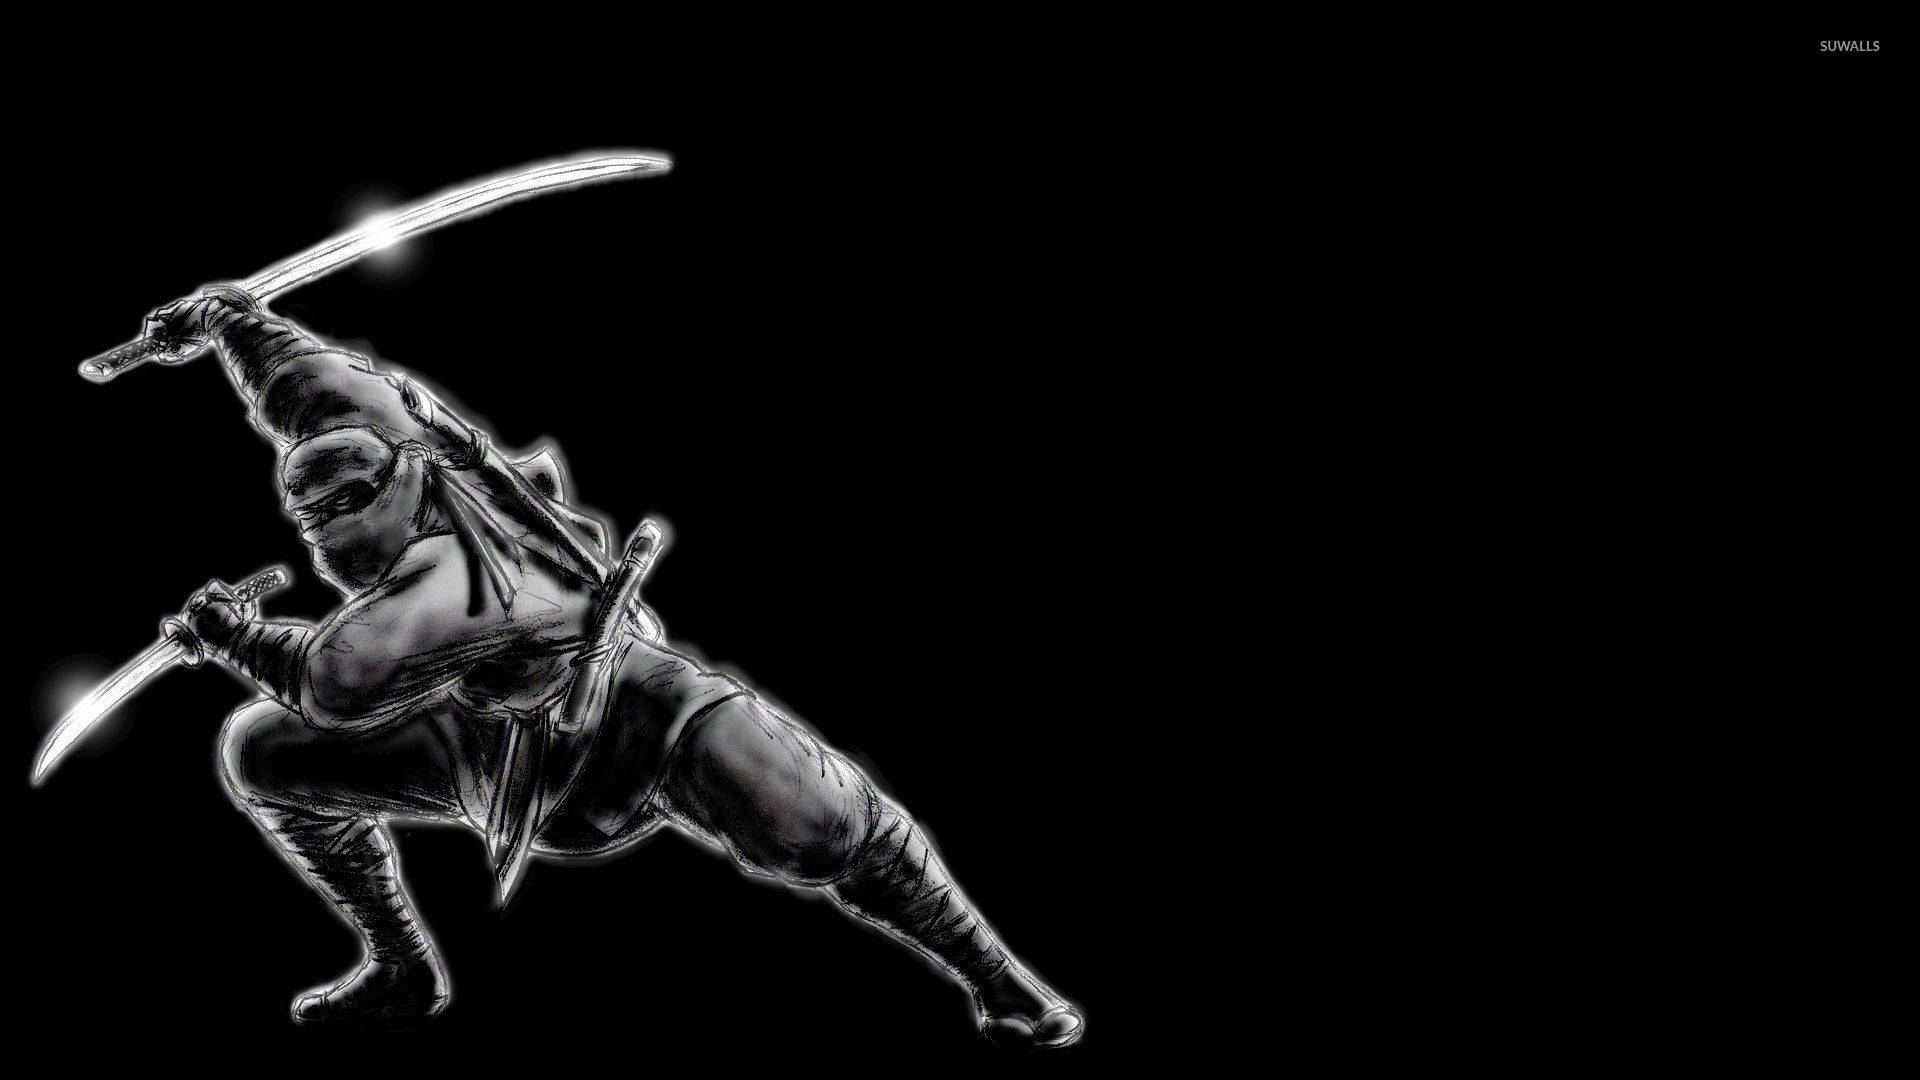 Monochrome Ninja Sketch Art Picture